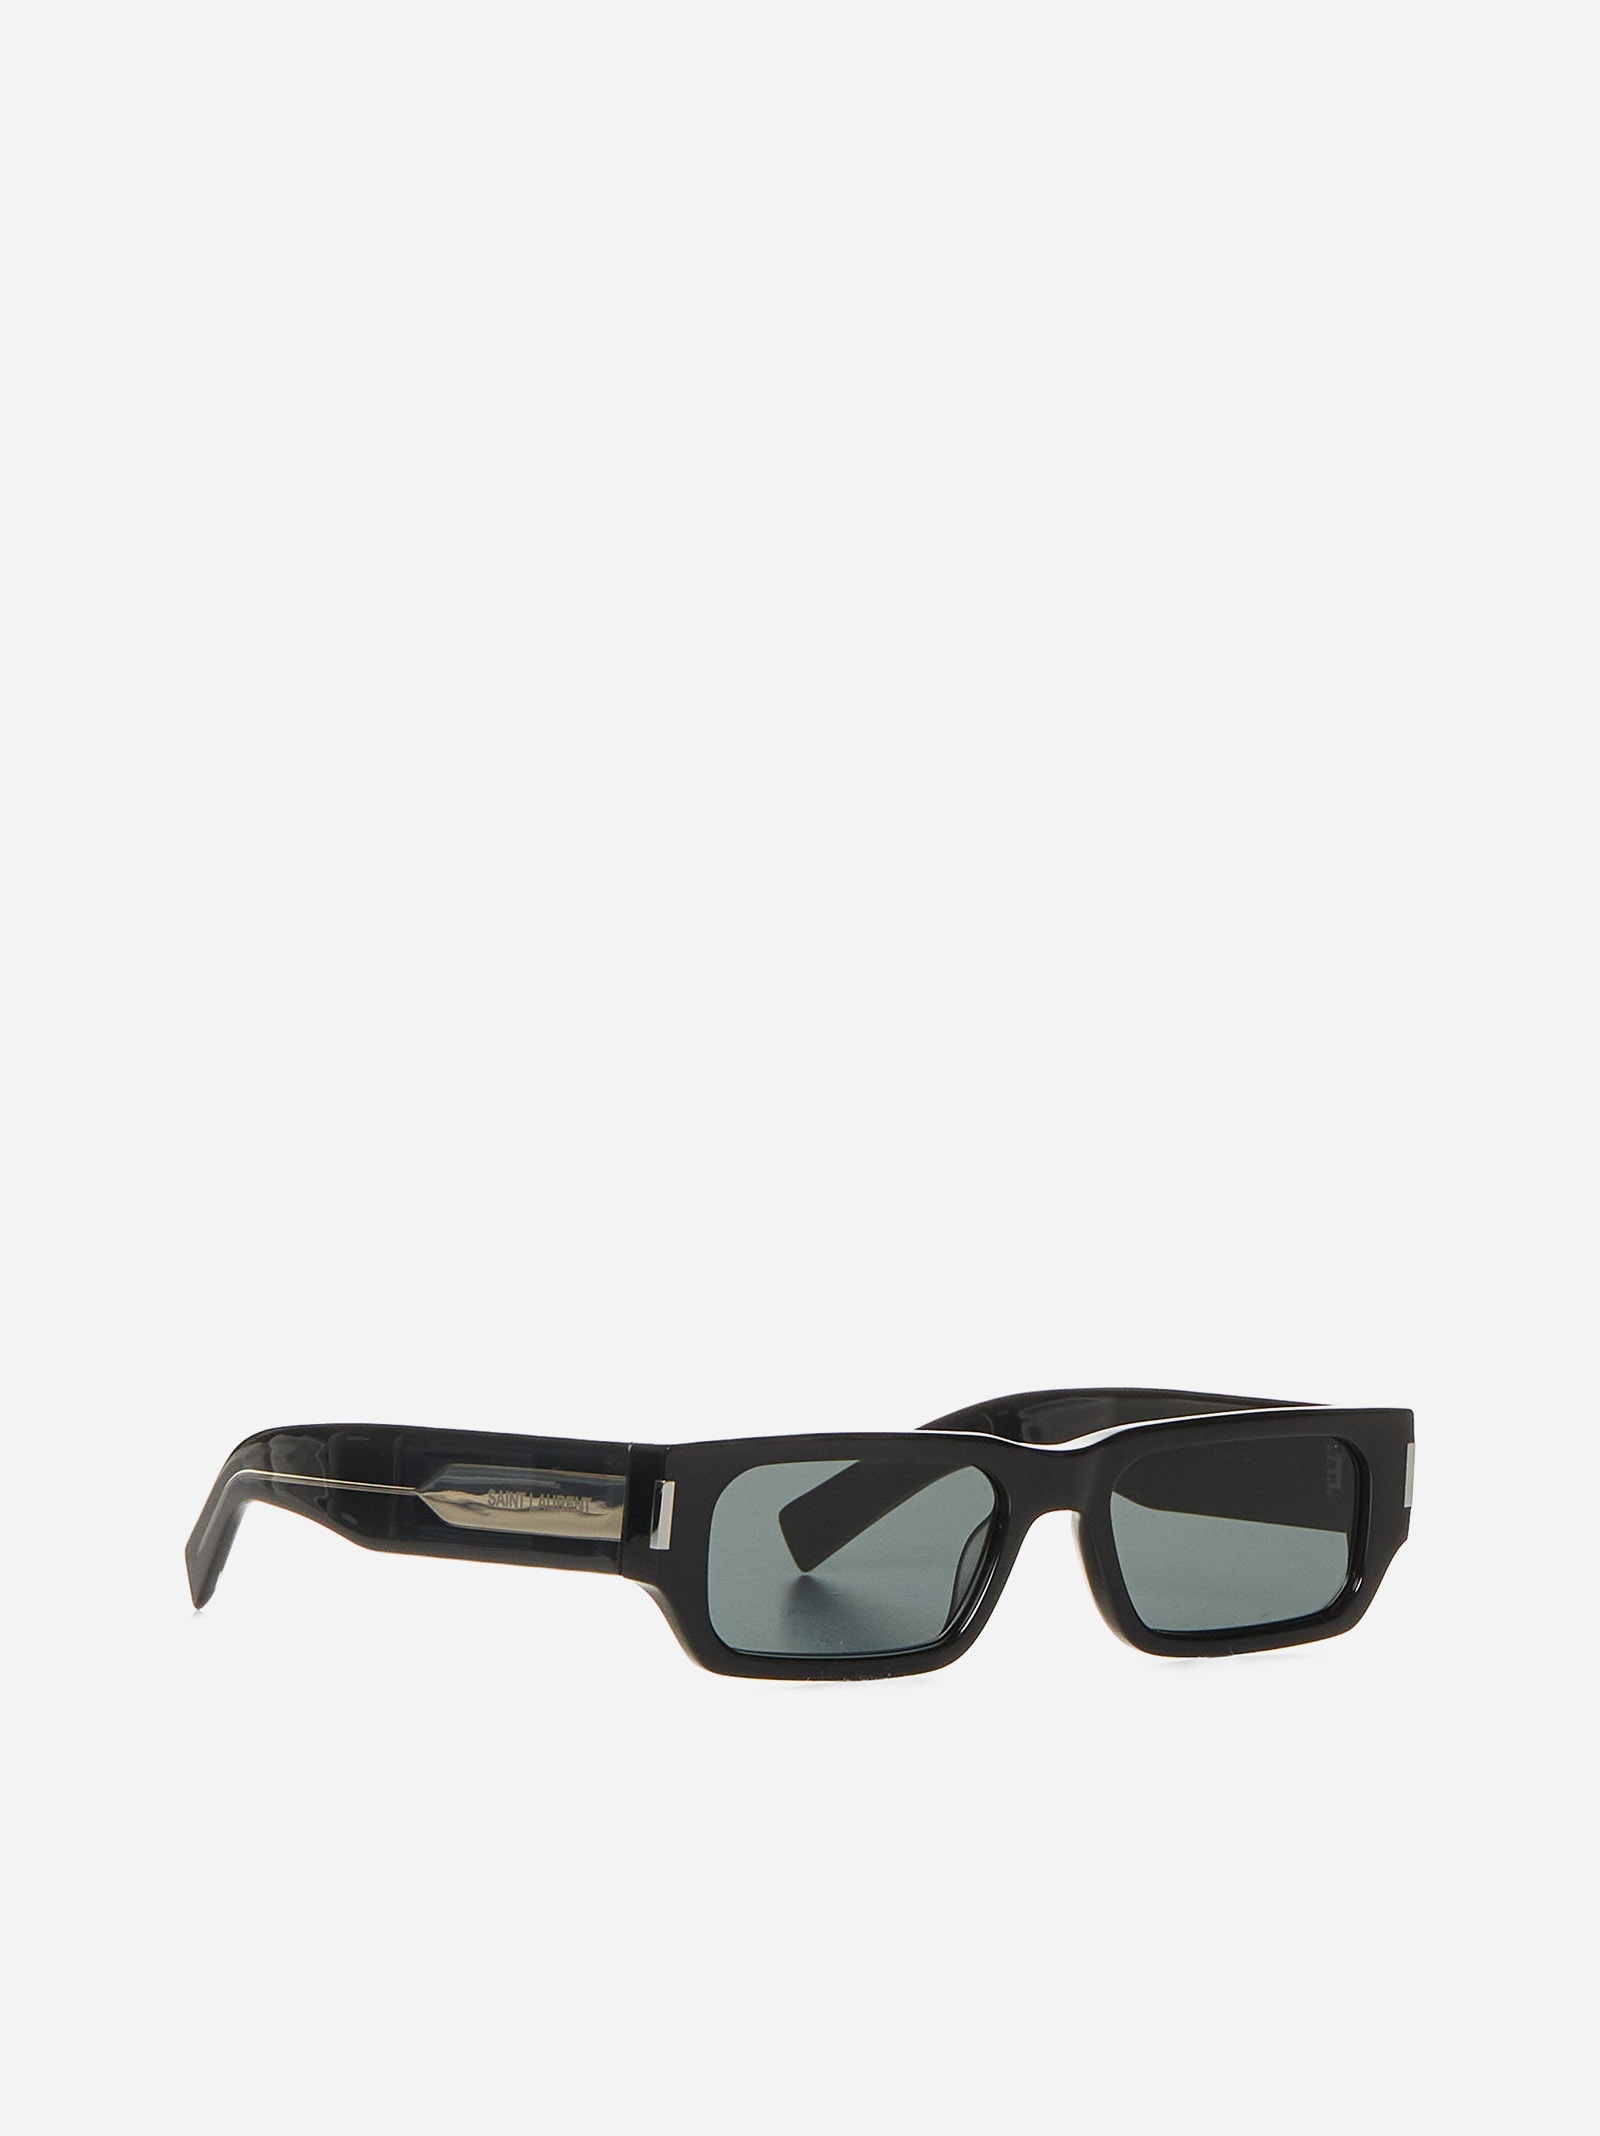 SL 660 sunglasses - 2